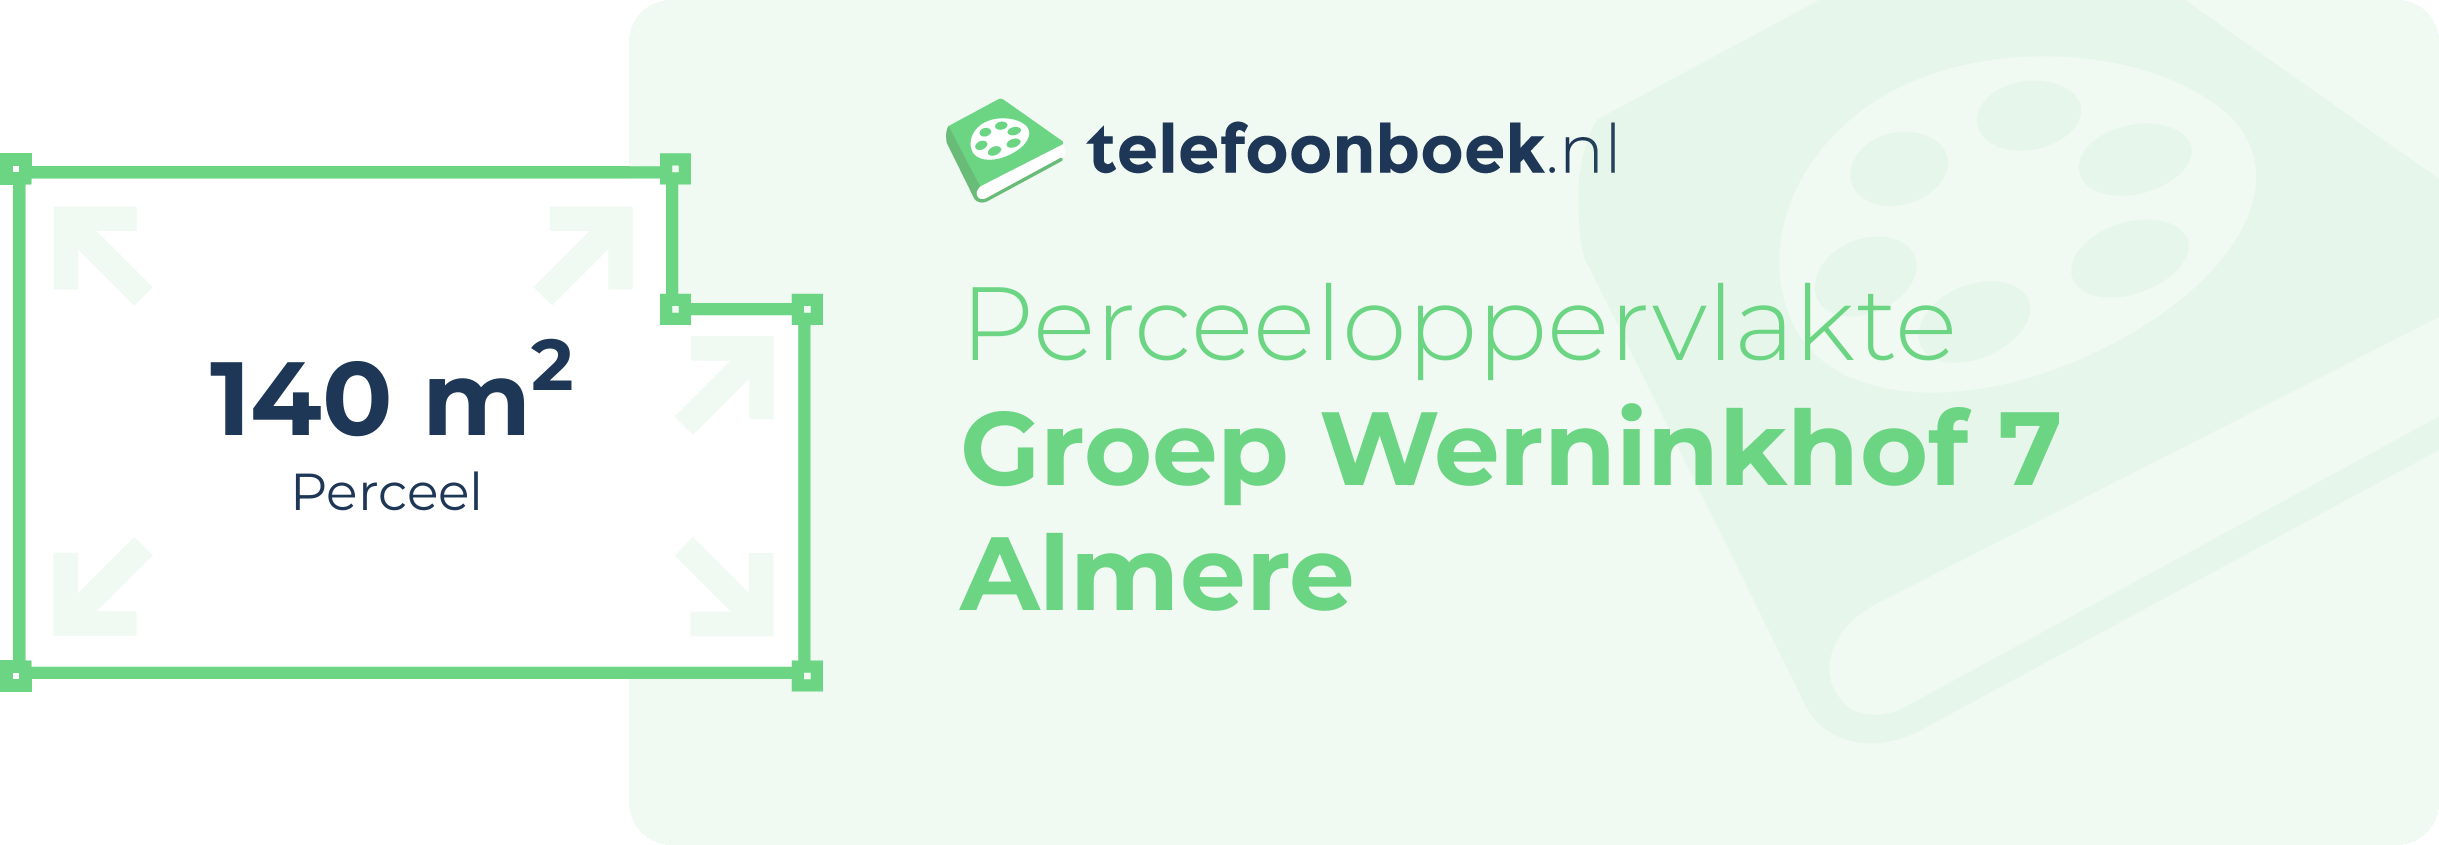 Perceeloppervlakte Groep Werninkhof 7 Almere